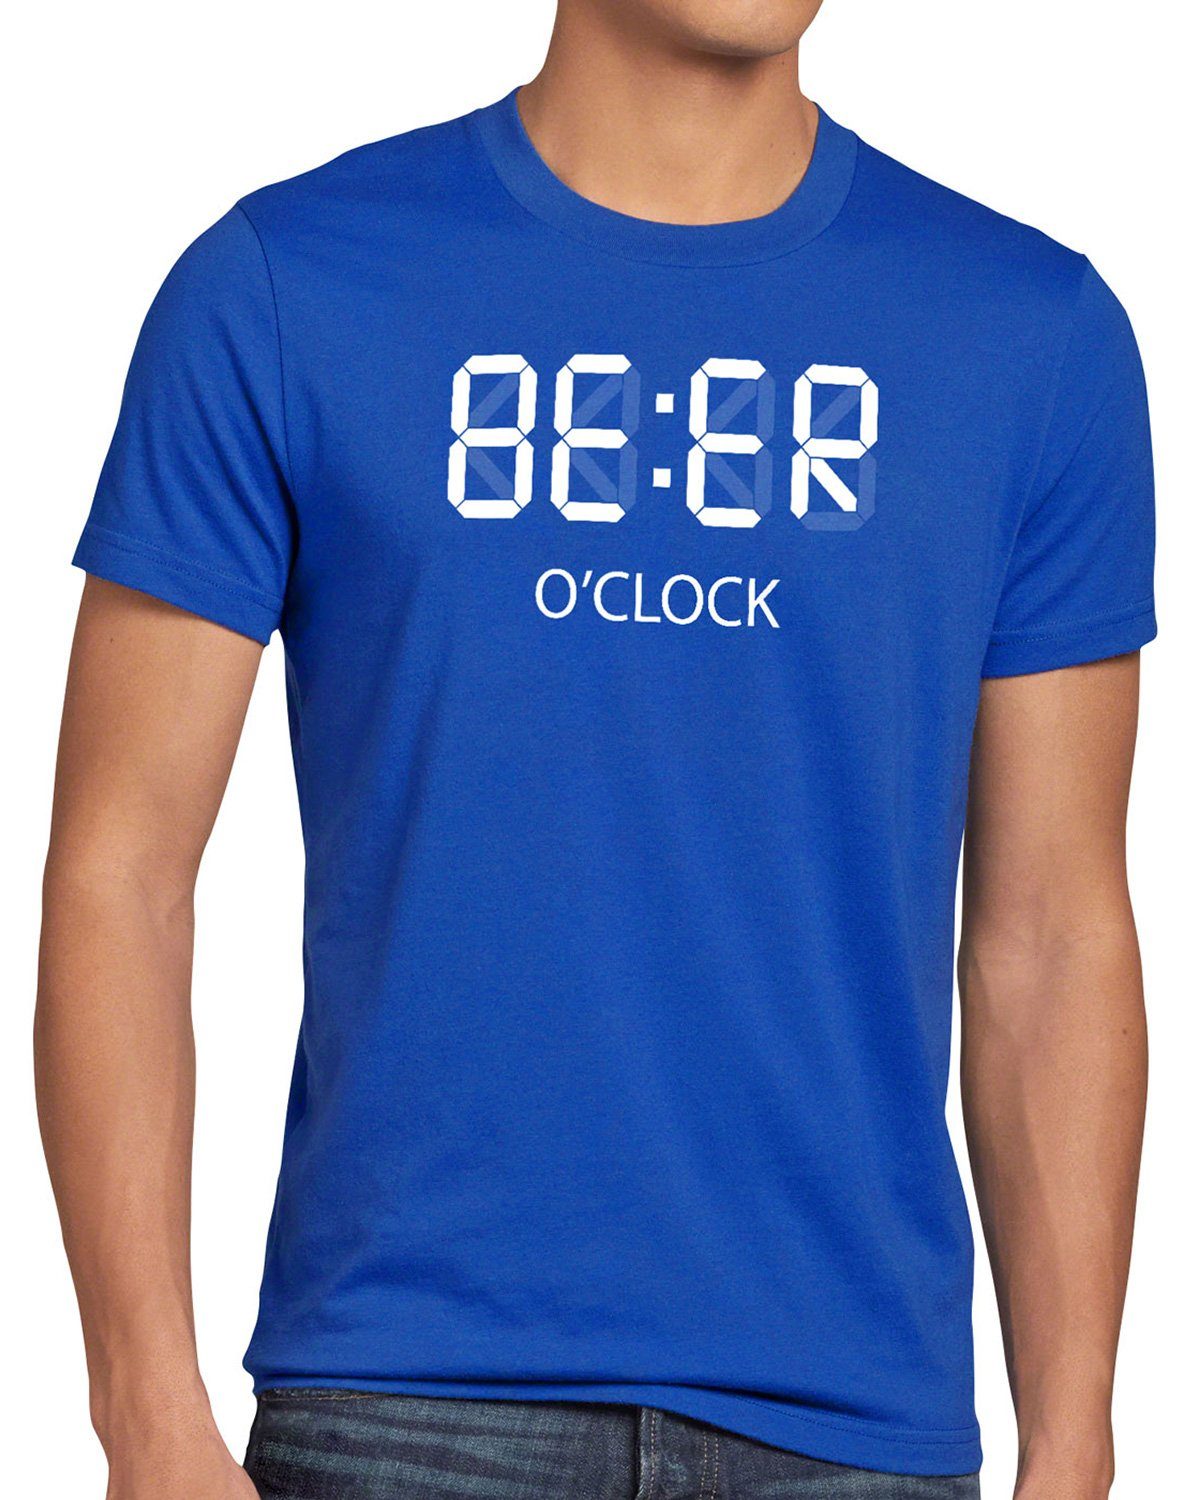 style3 Print-Shirt Herren T-Shirt BEER o'clock jga mallorca saufen papa blau